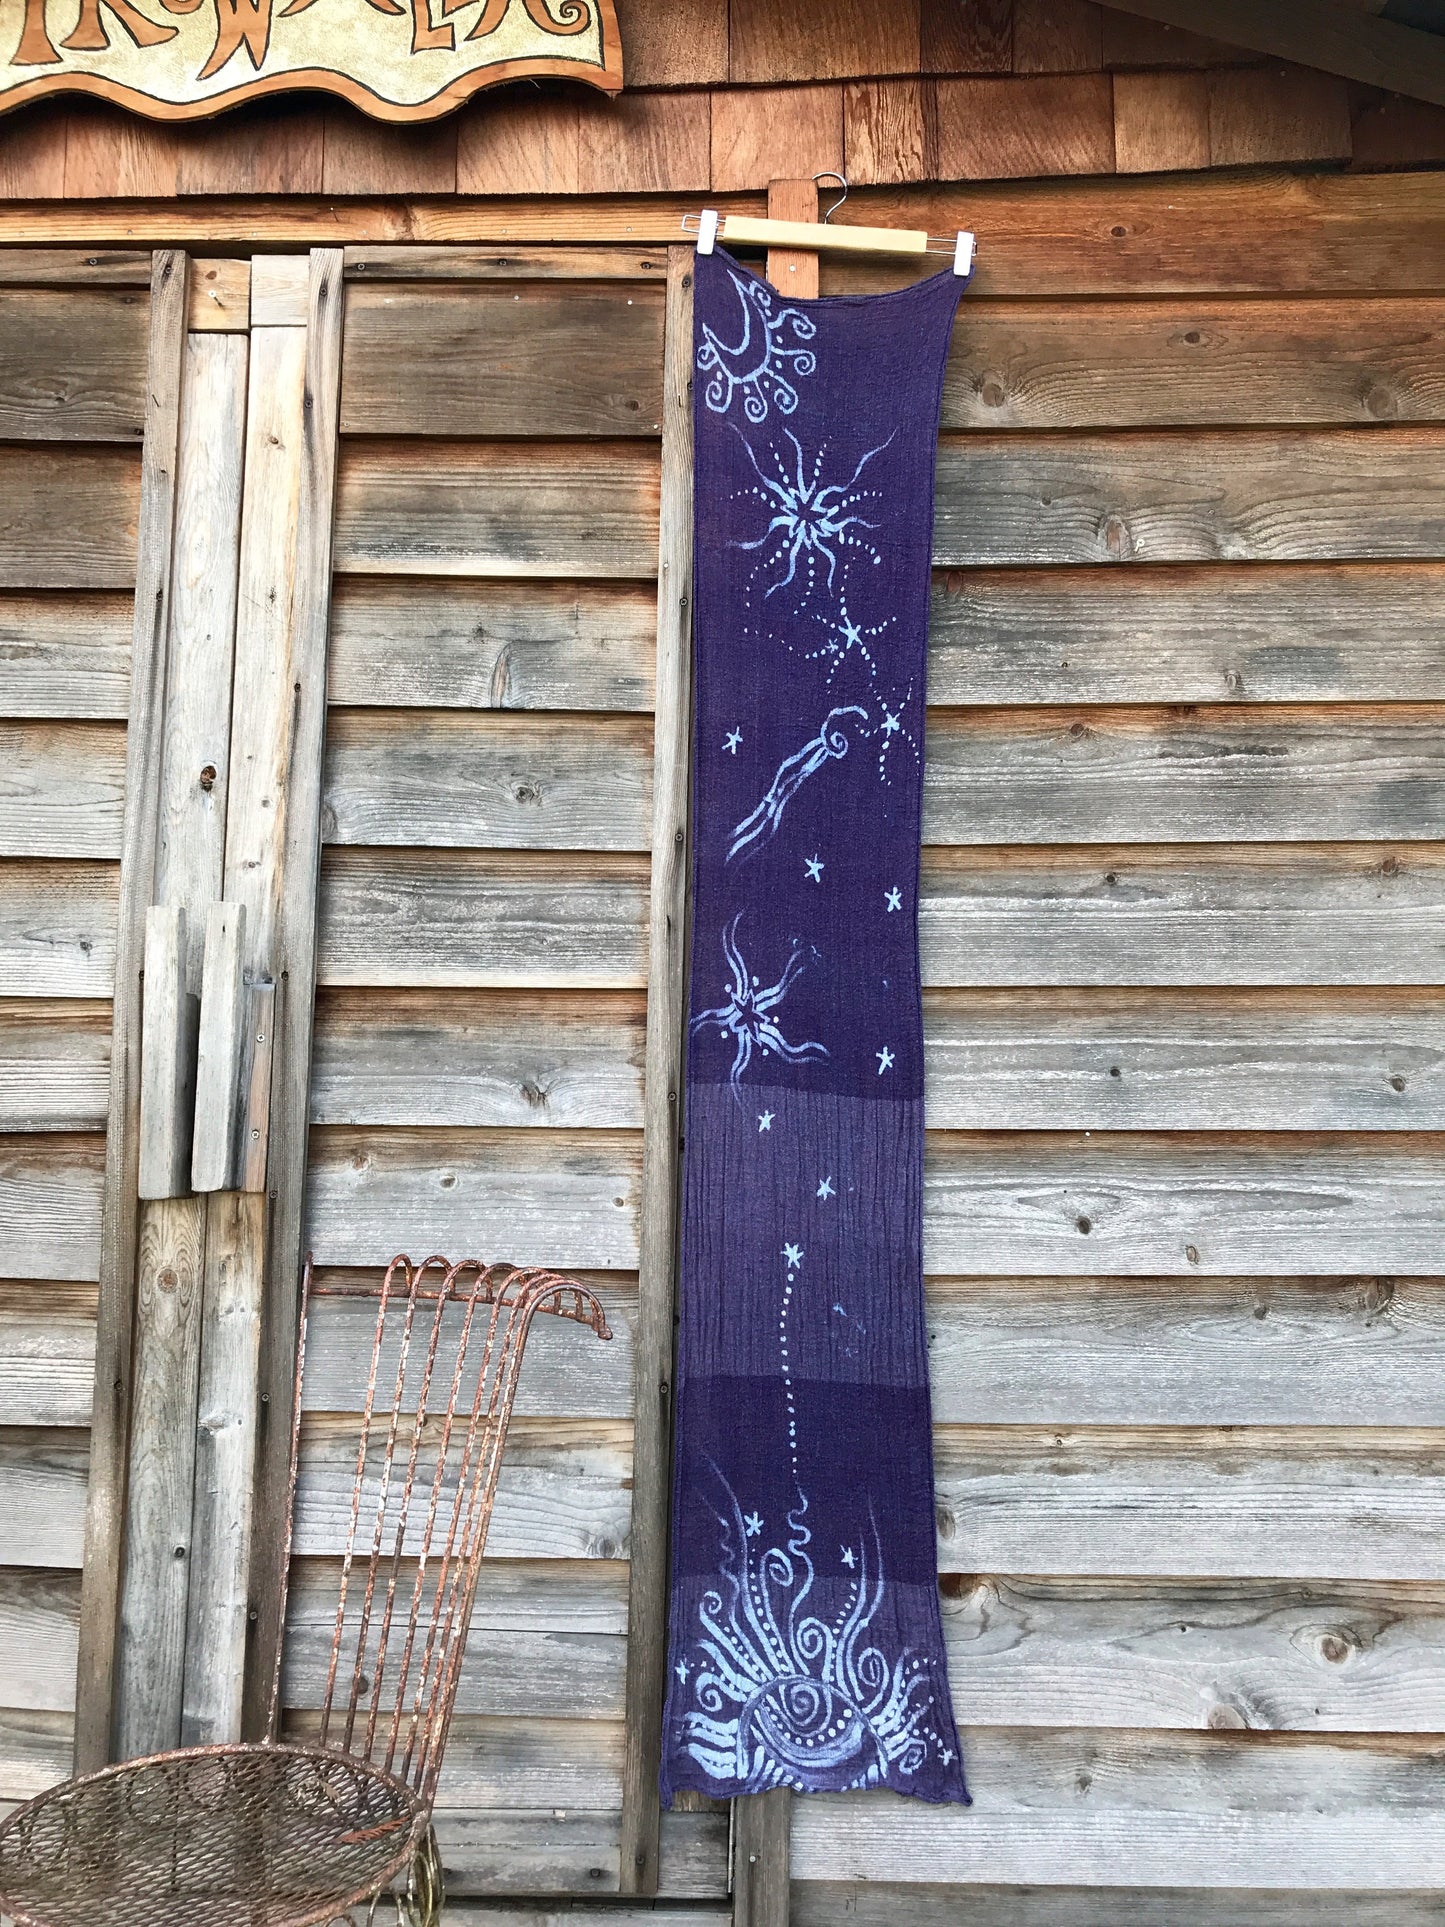 Purple Star Party Handmade Batik Scarf in Organic Cotton - Longer Length